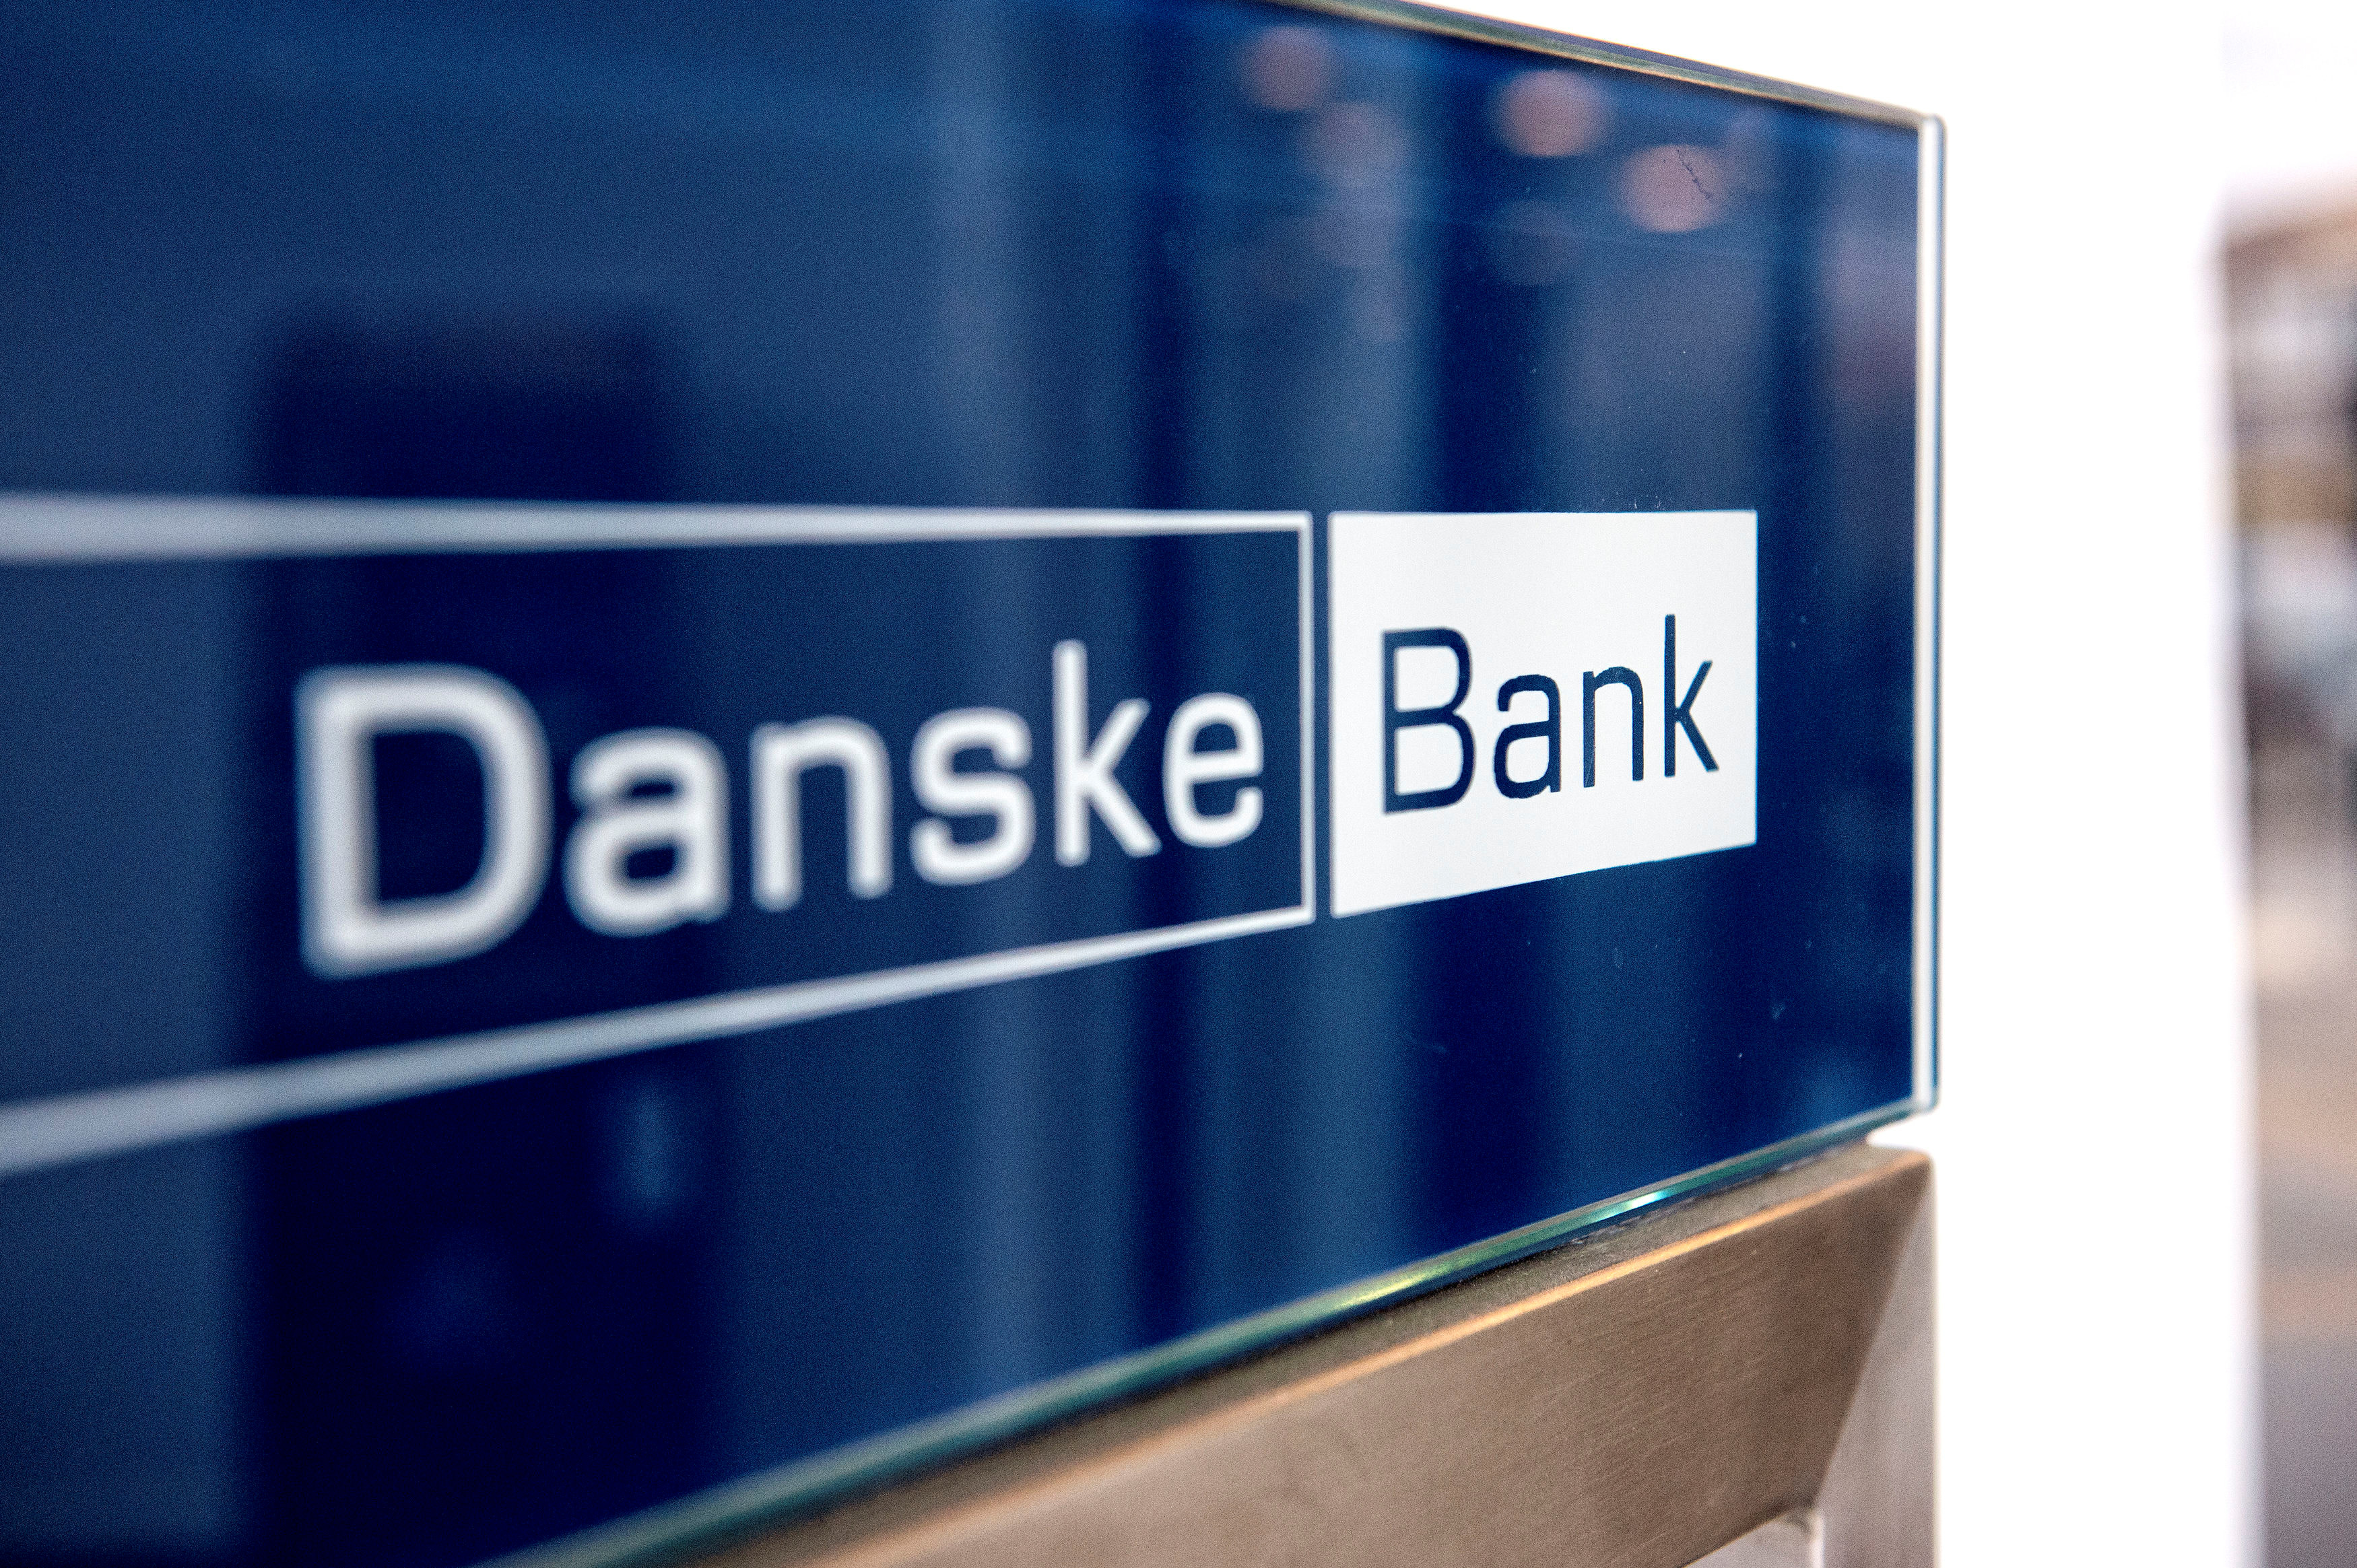 Nomination of new directors to the board of directors of Danske Bank